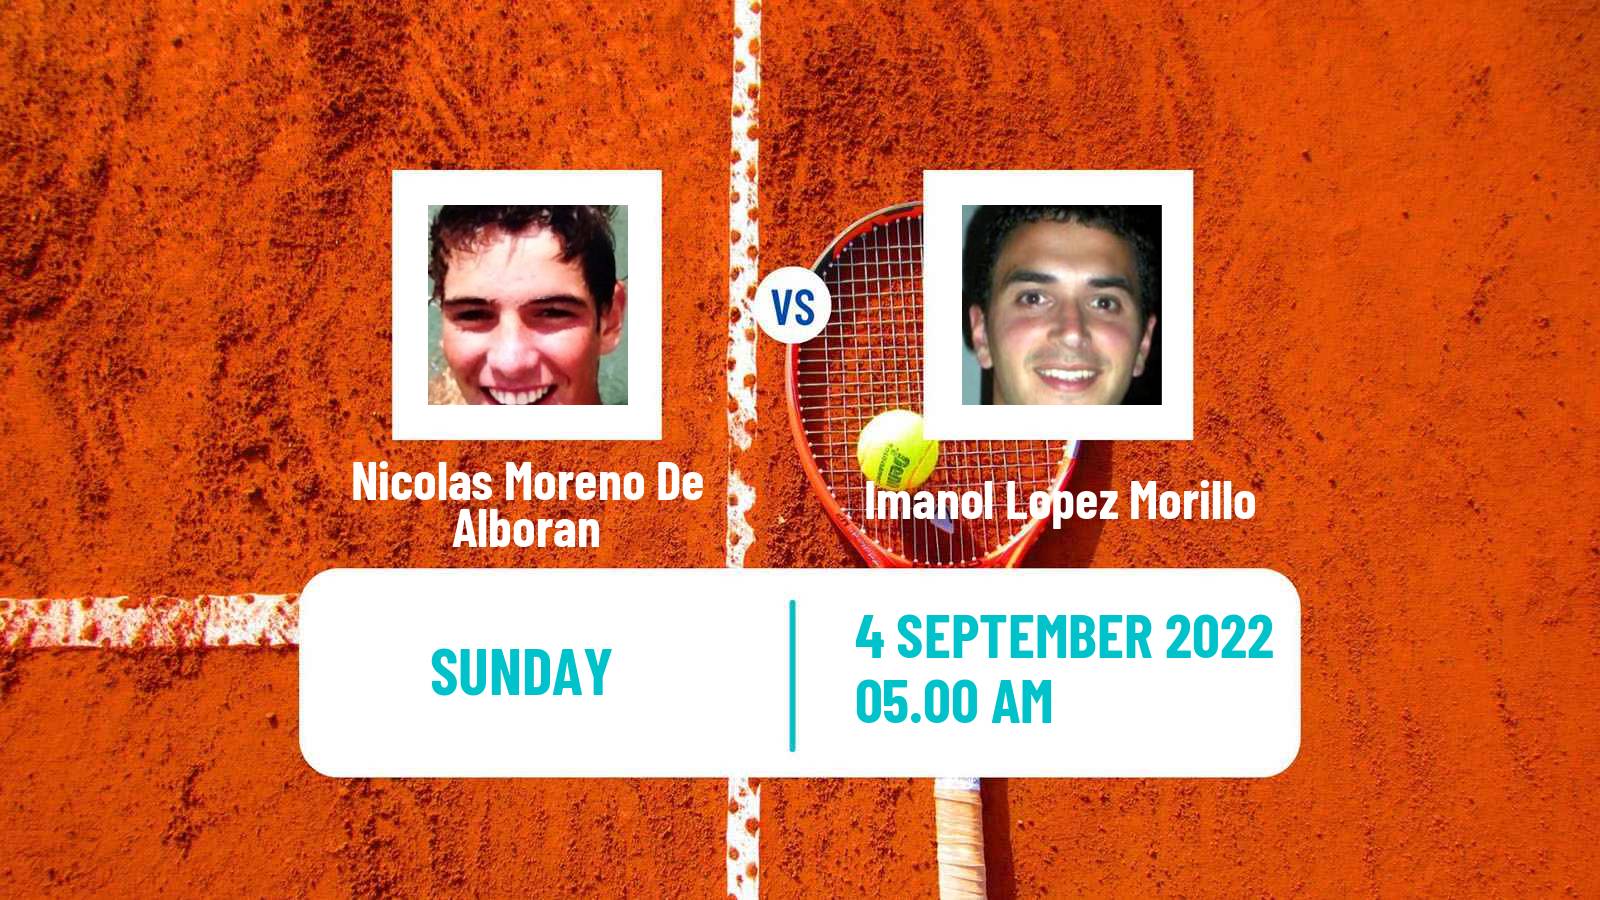 Tennis ATP Challenger Nicolas Moreno De Alboran - Imanol Lopez Morillo